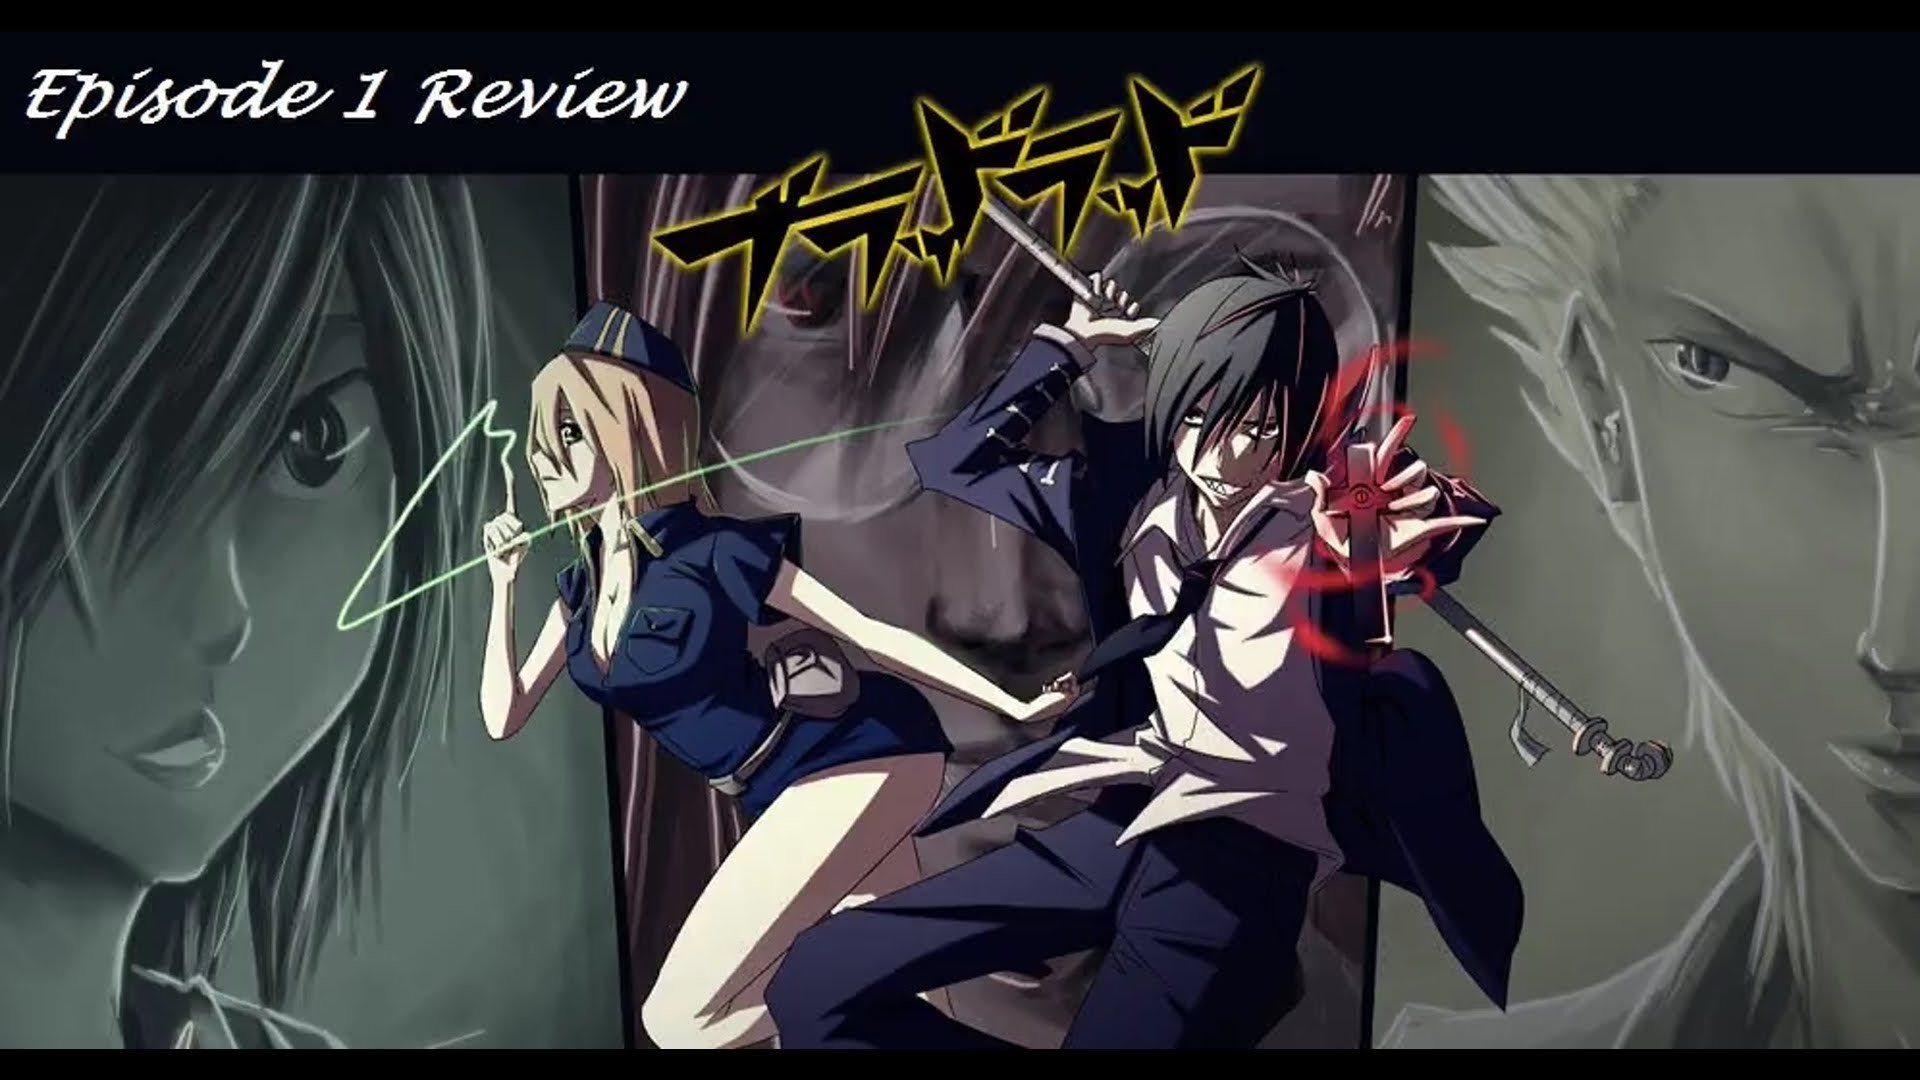 1920x1080 REVIEW: Blood Lad Episode 1 - Vampire Otaku!